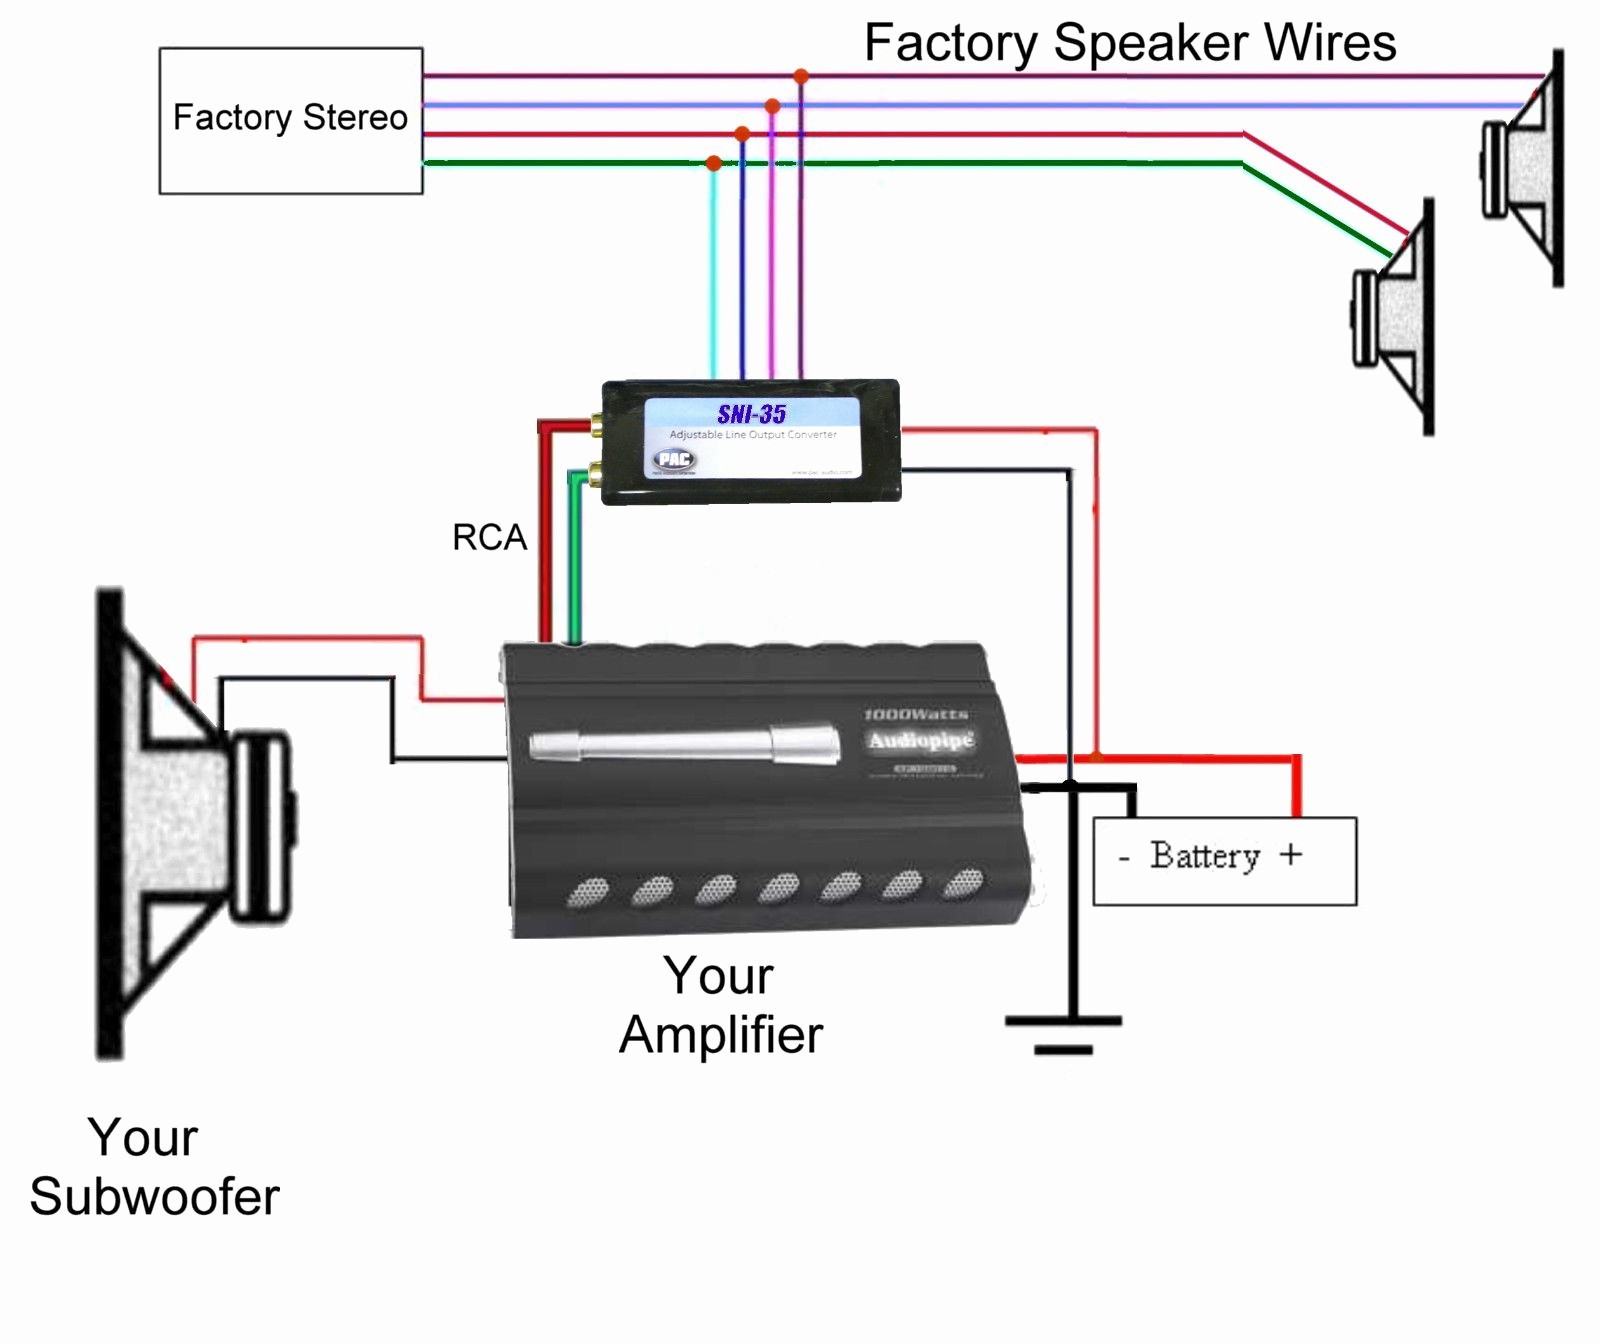 sni 35 adjustable line output converter wiring diagram Collection Pac Line Output Converter Wiring Diagram